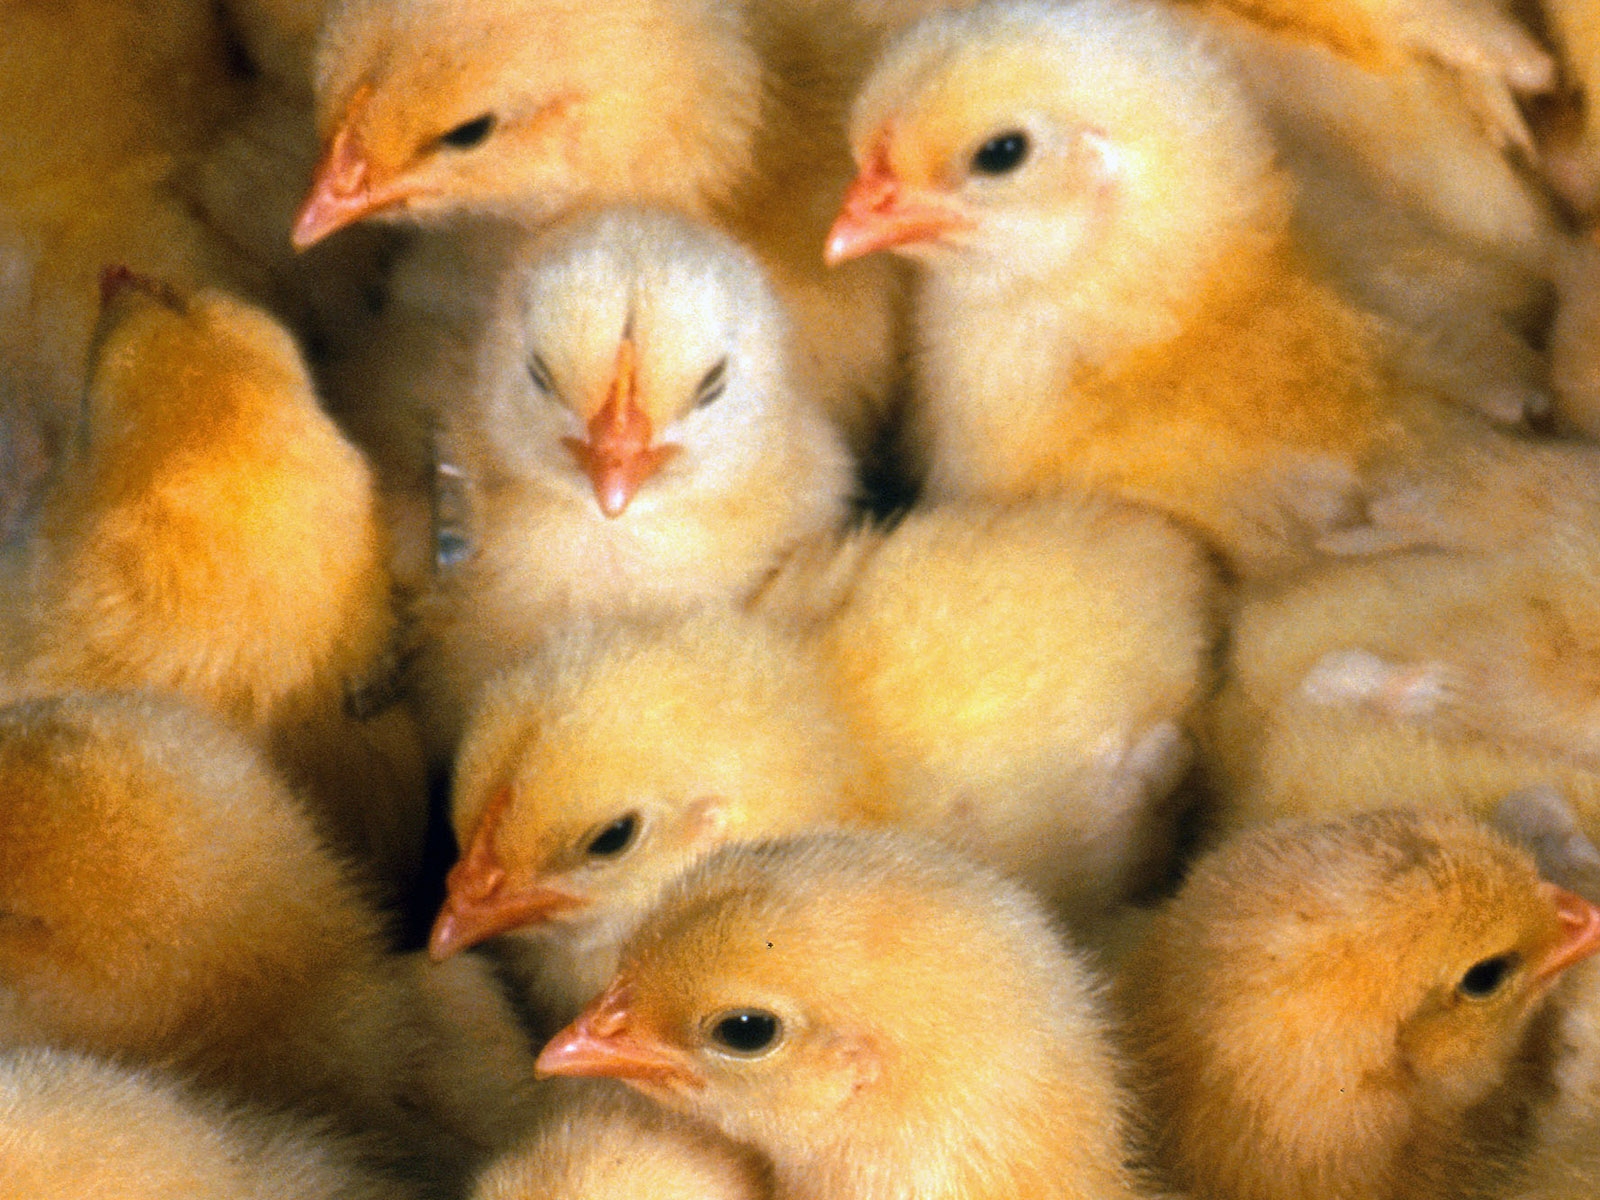 Chicks Lustdoctor